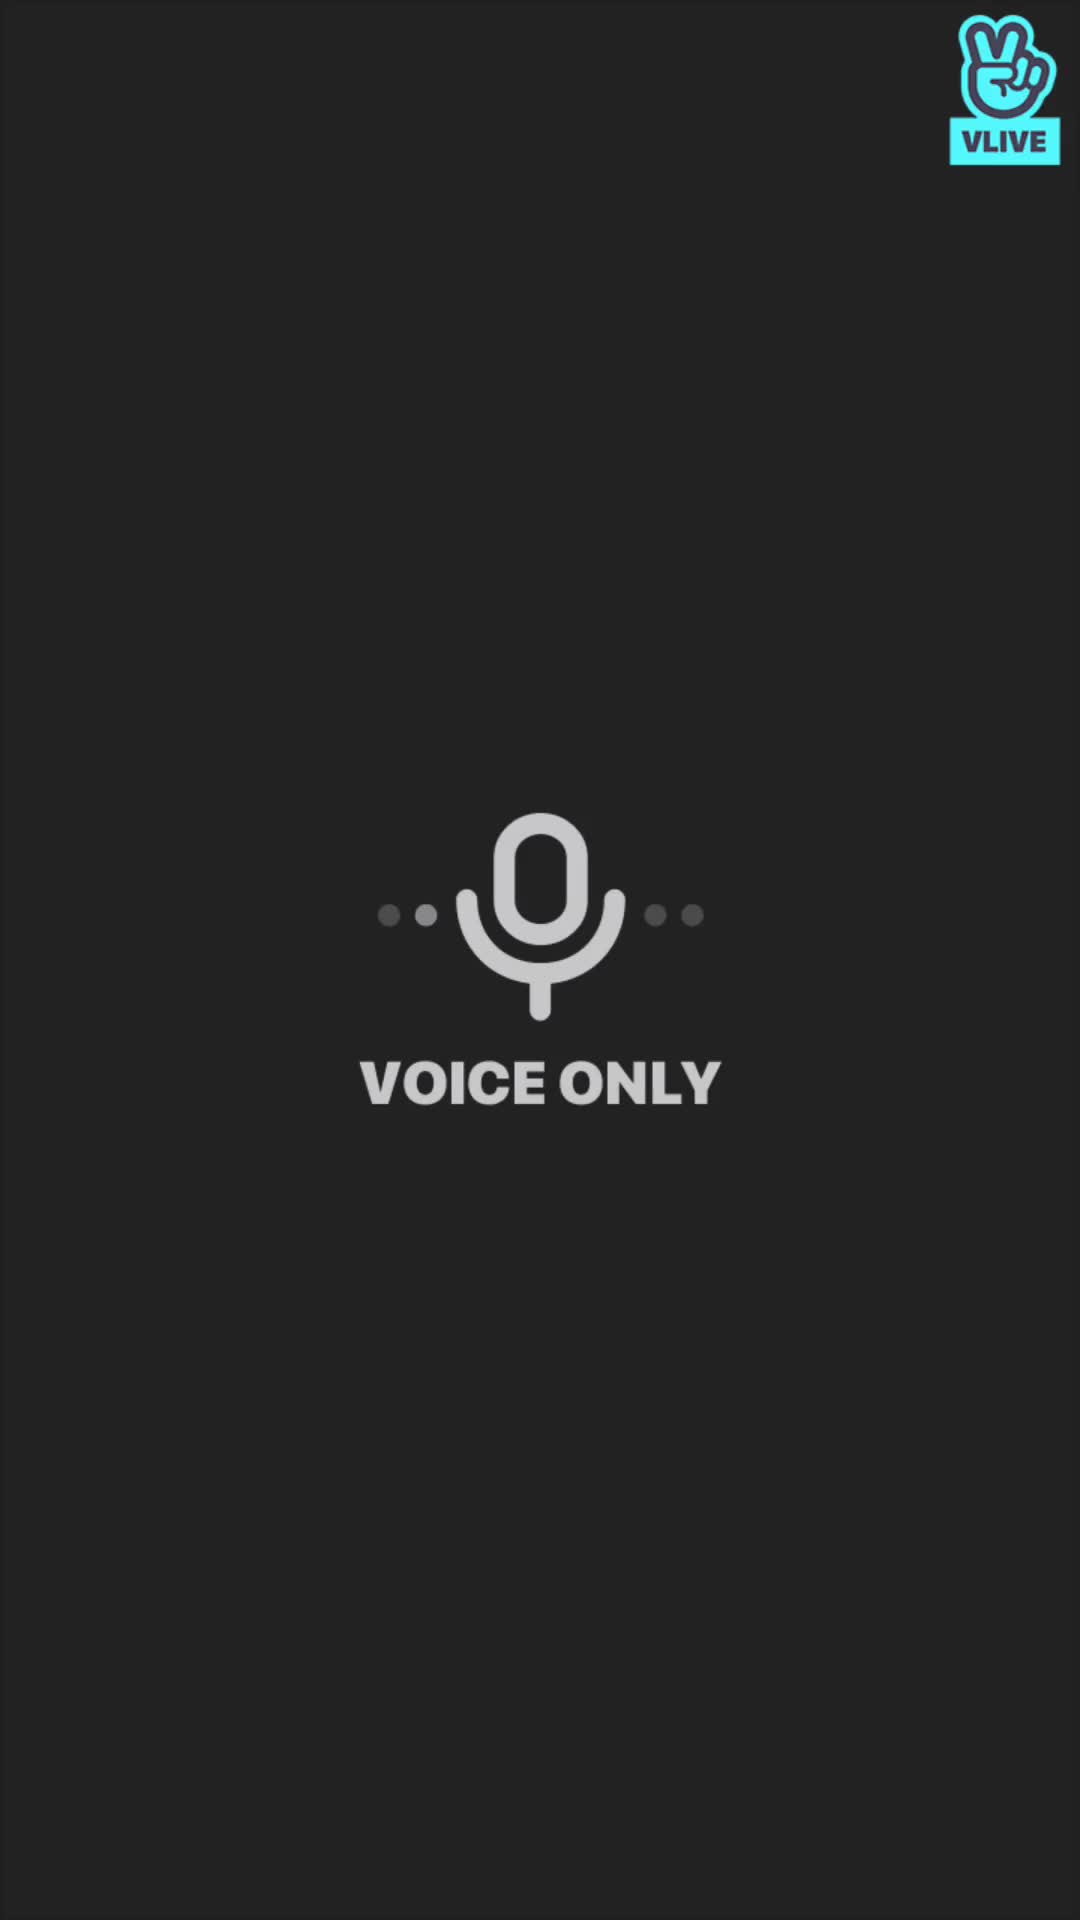 [RADIO] 캐럿들 귀대귀대 # 80 호랑이의 청각